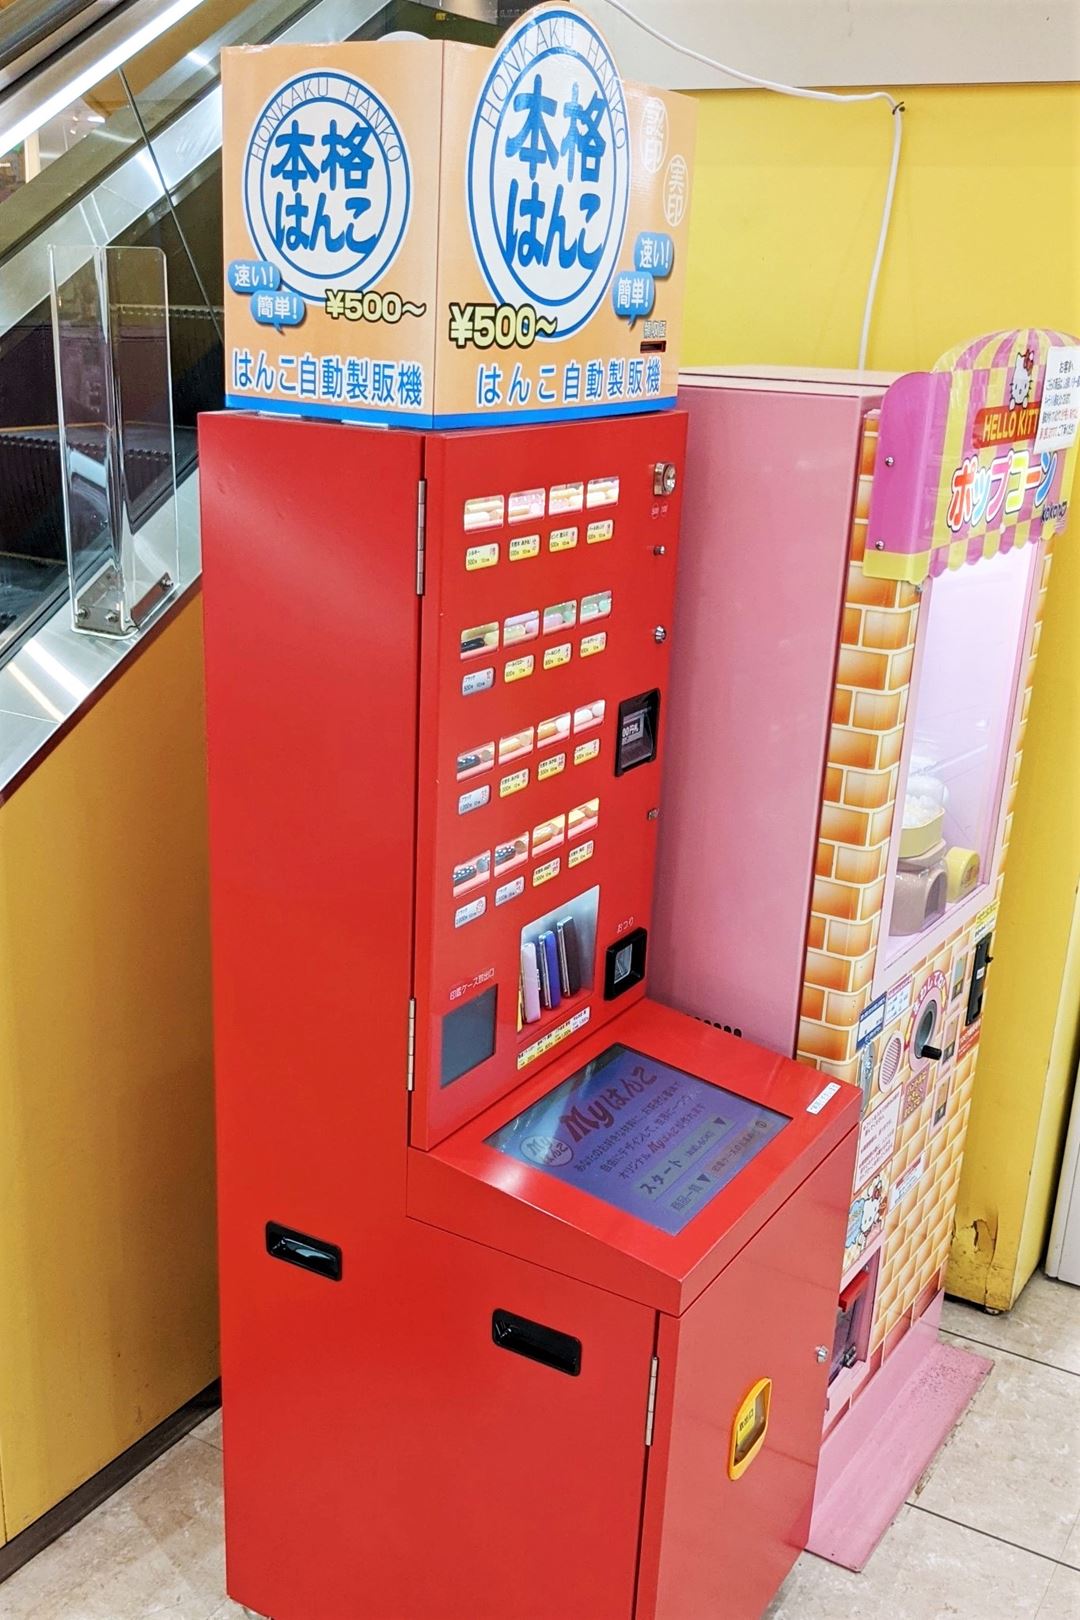 HANKO Seal Vending Machine はんこ自動販売機